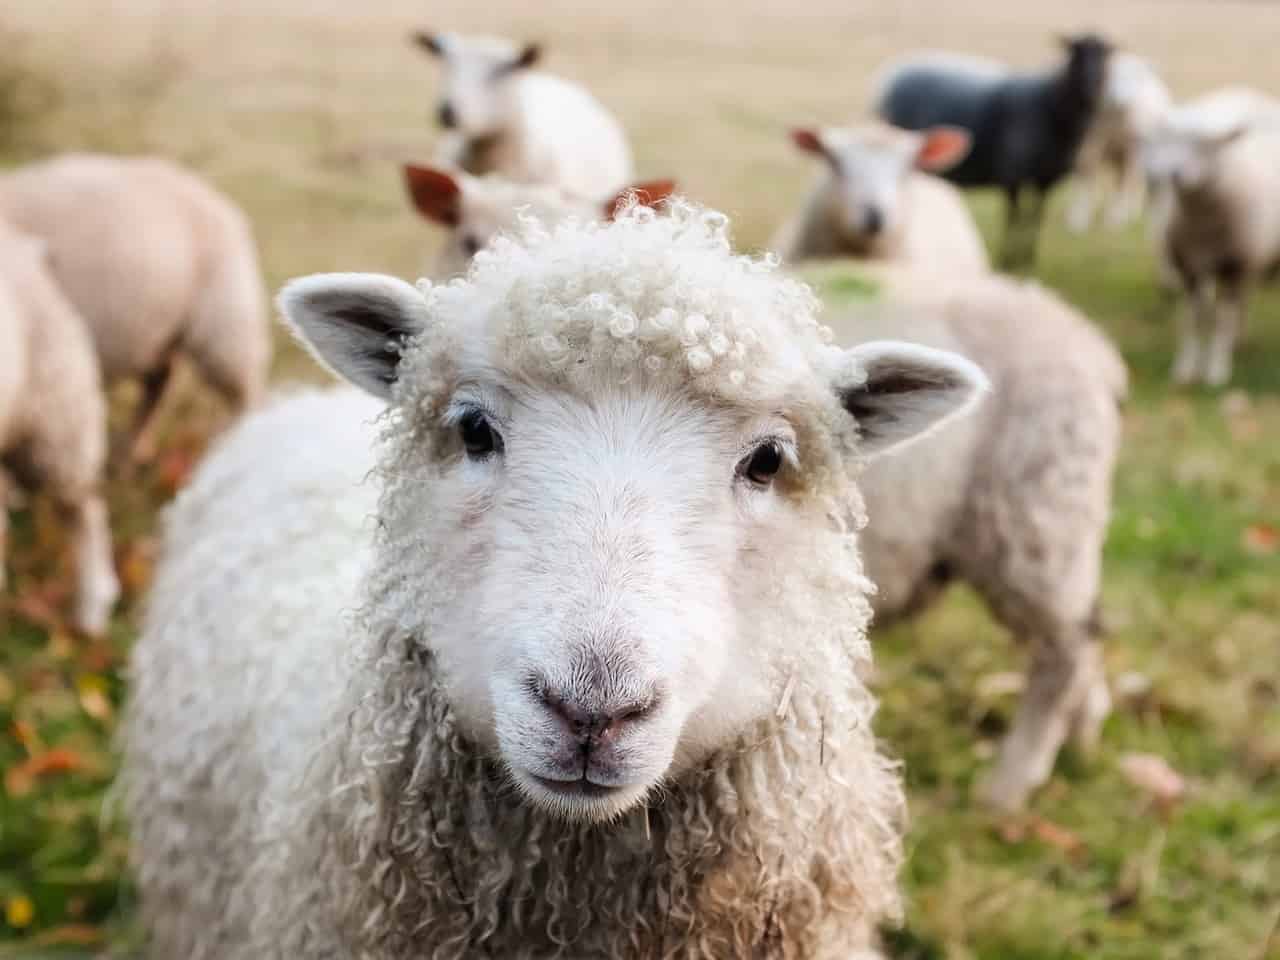 Sheep Feeding Chart